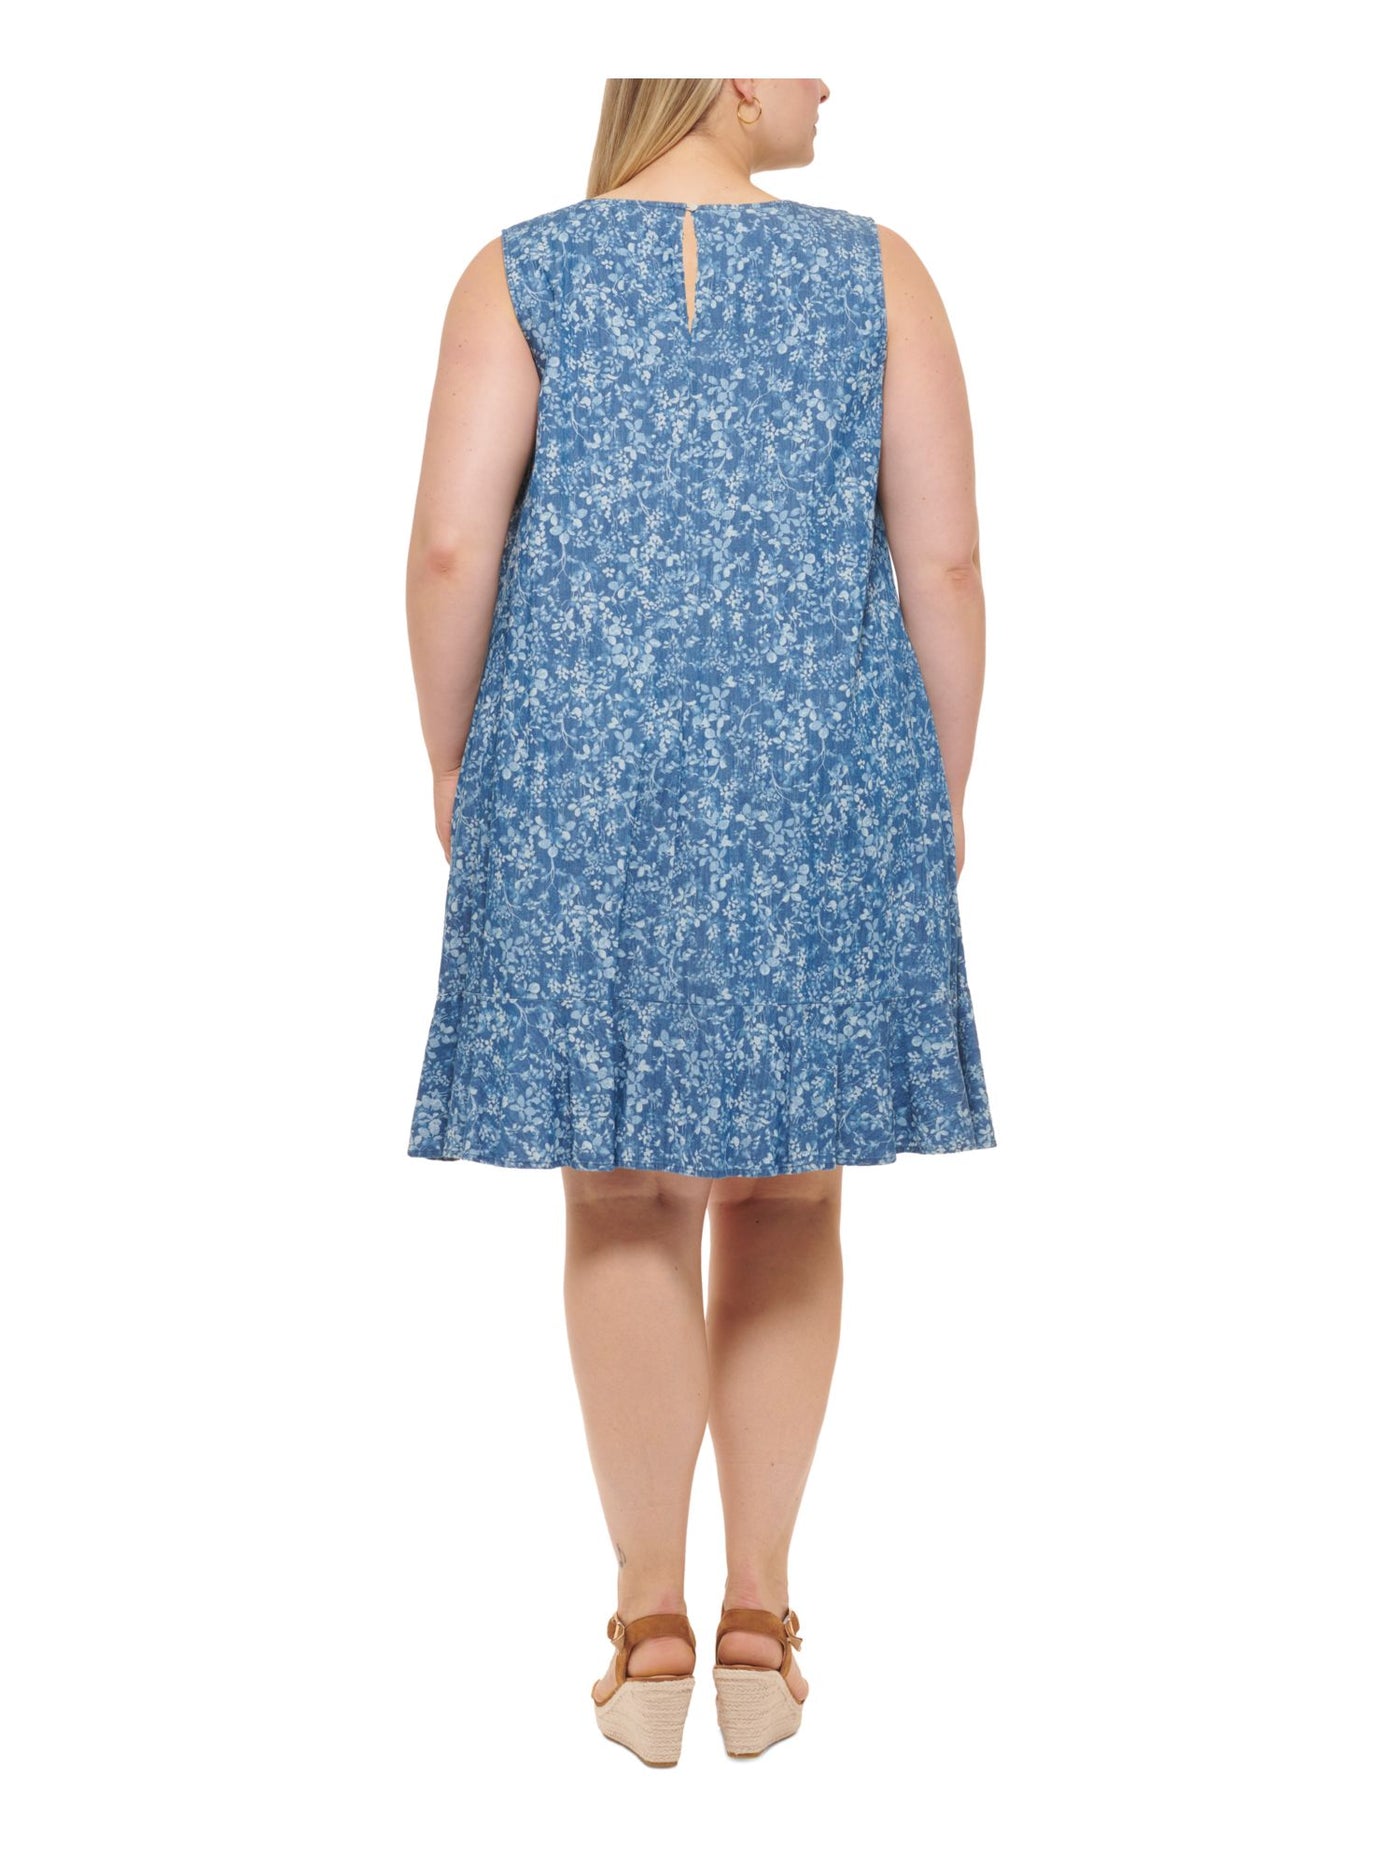 TOMMY HILFIGER Womens Blue Floral Sleeveless Jewel Neck Knee Length Shift Dress Plus 14W